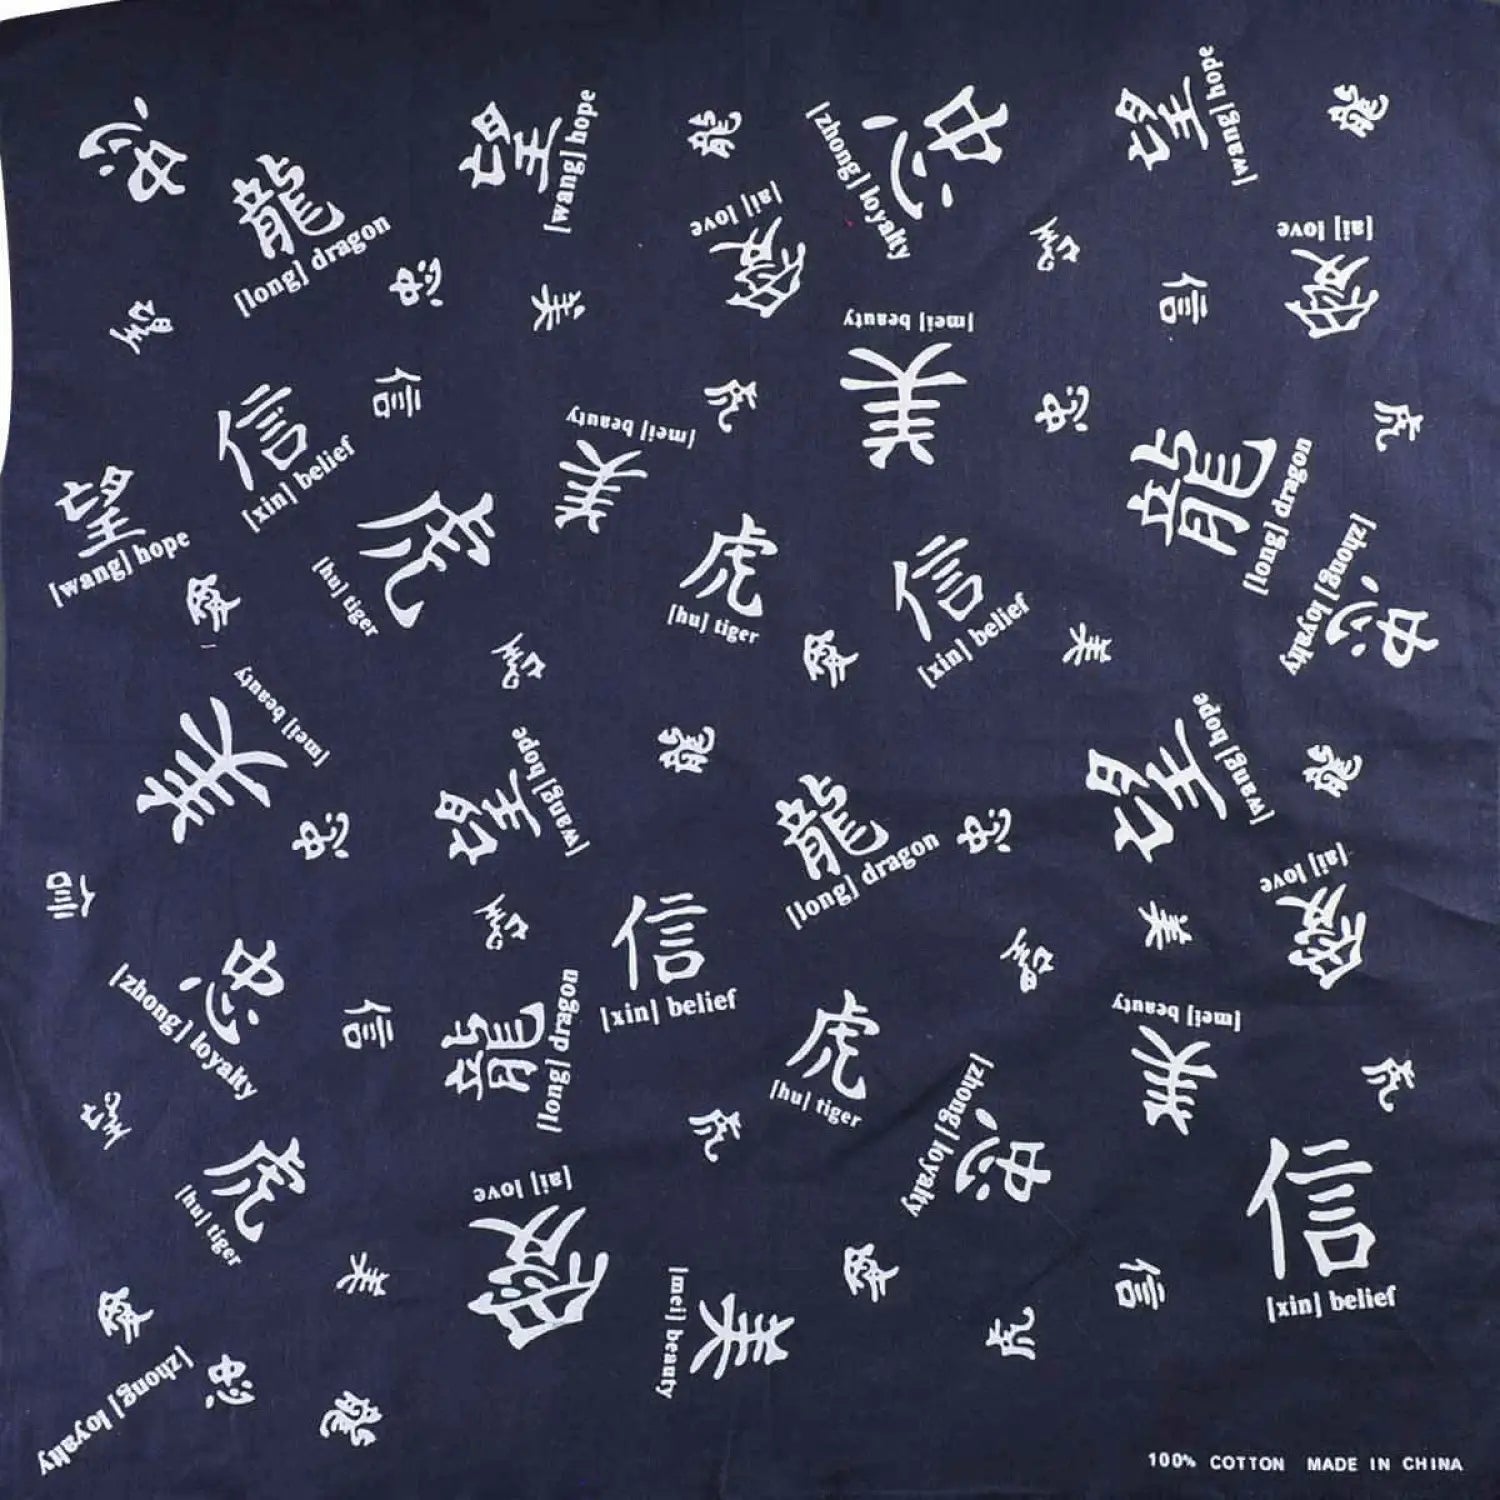 Black and white bandana with Chinese character print - versatile and stylish accessory.